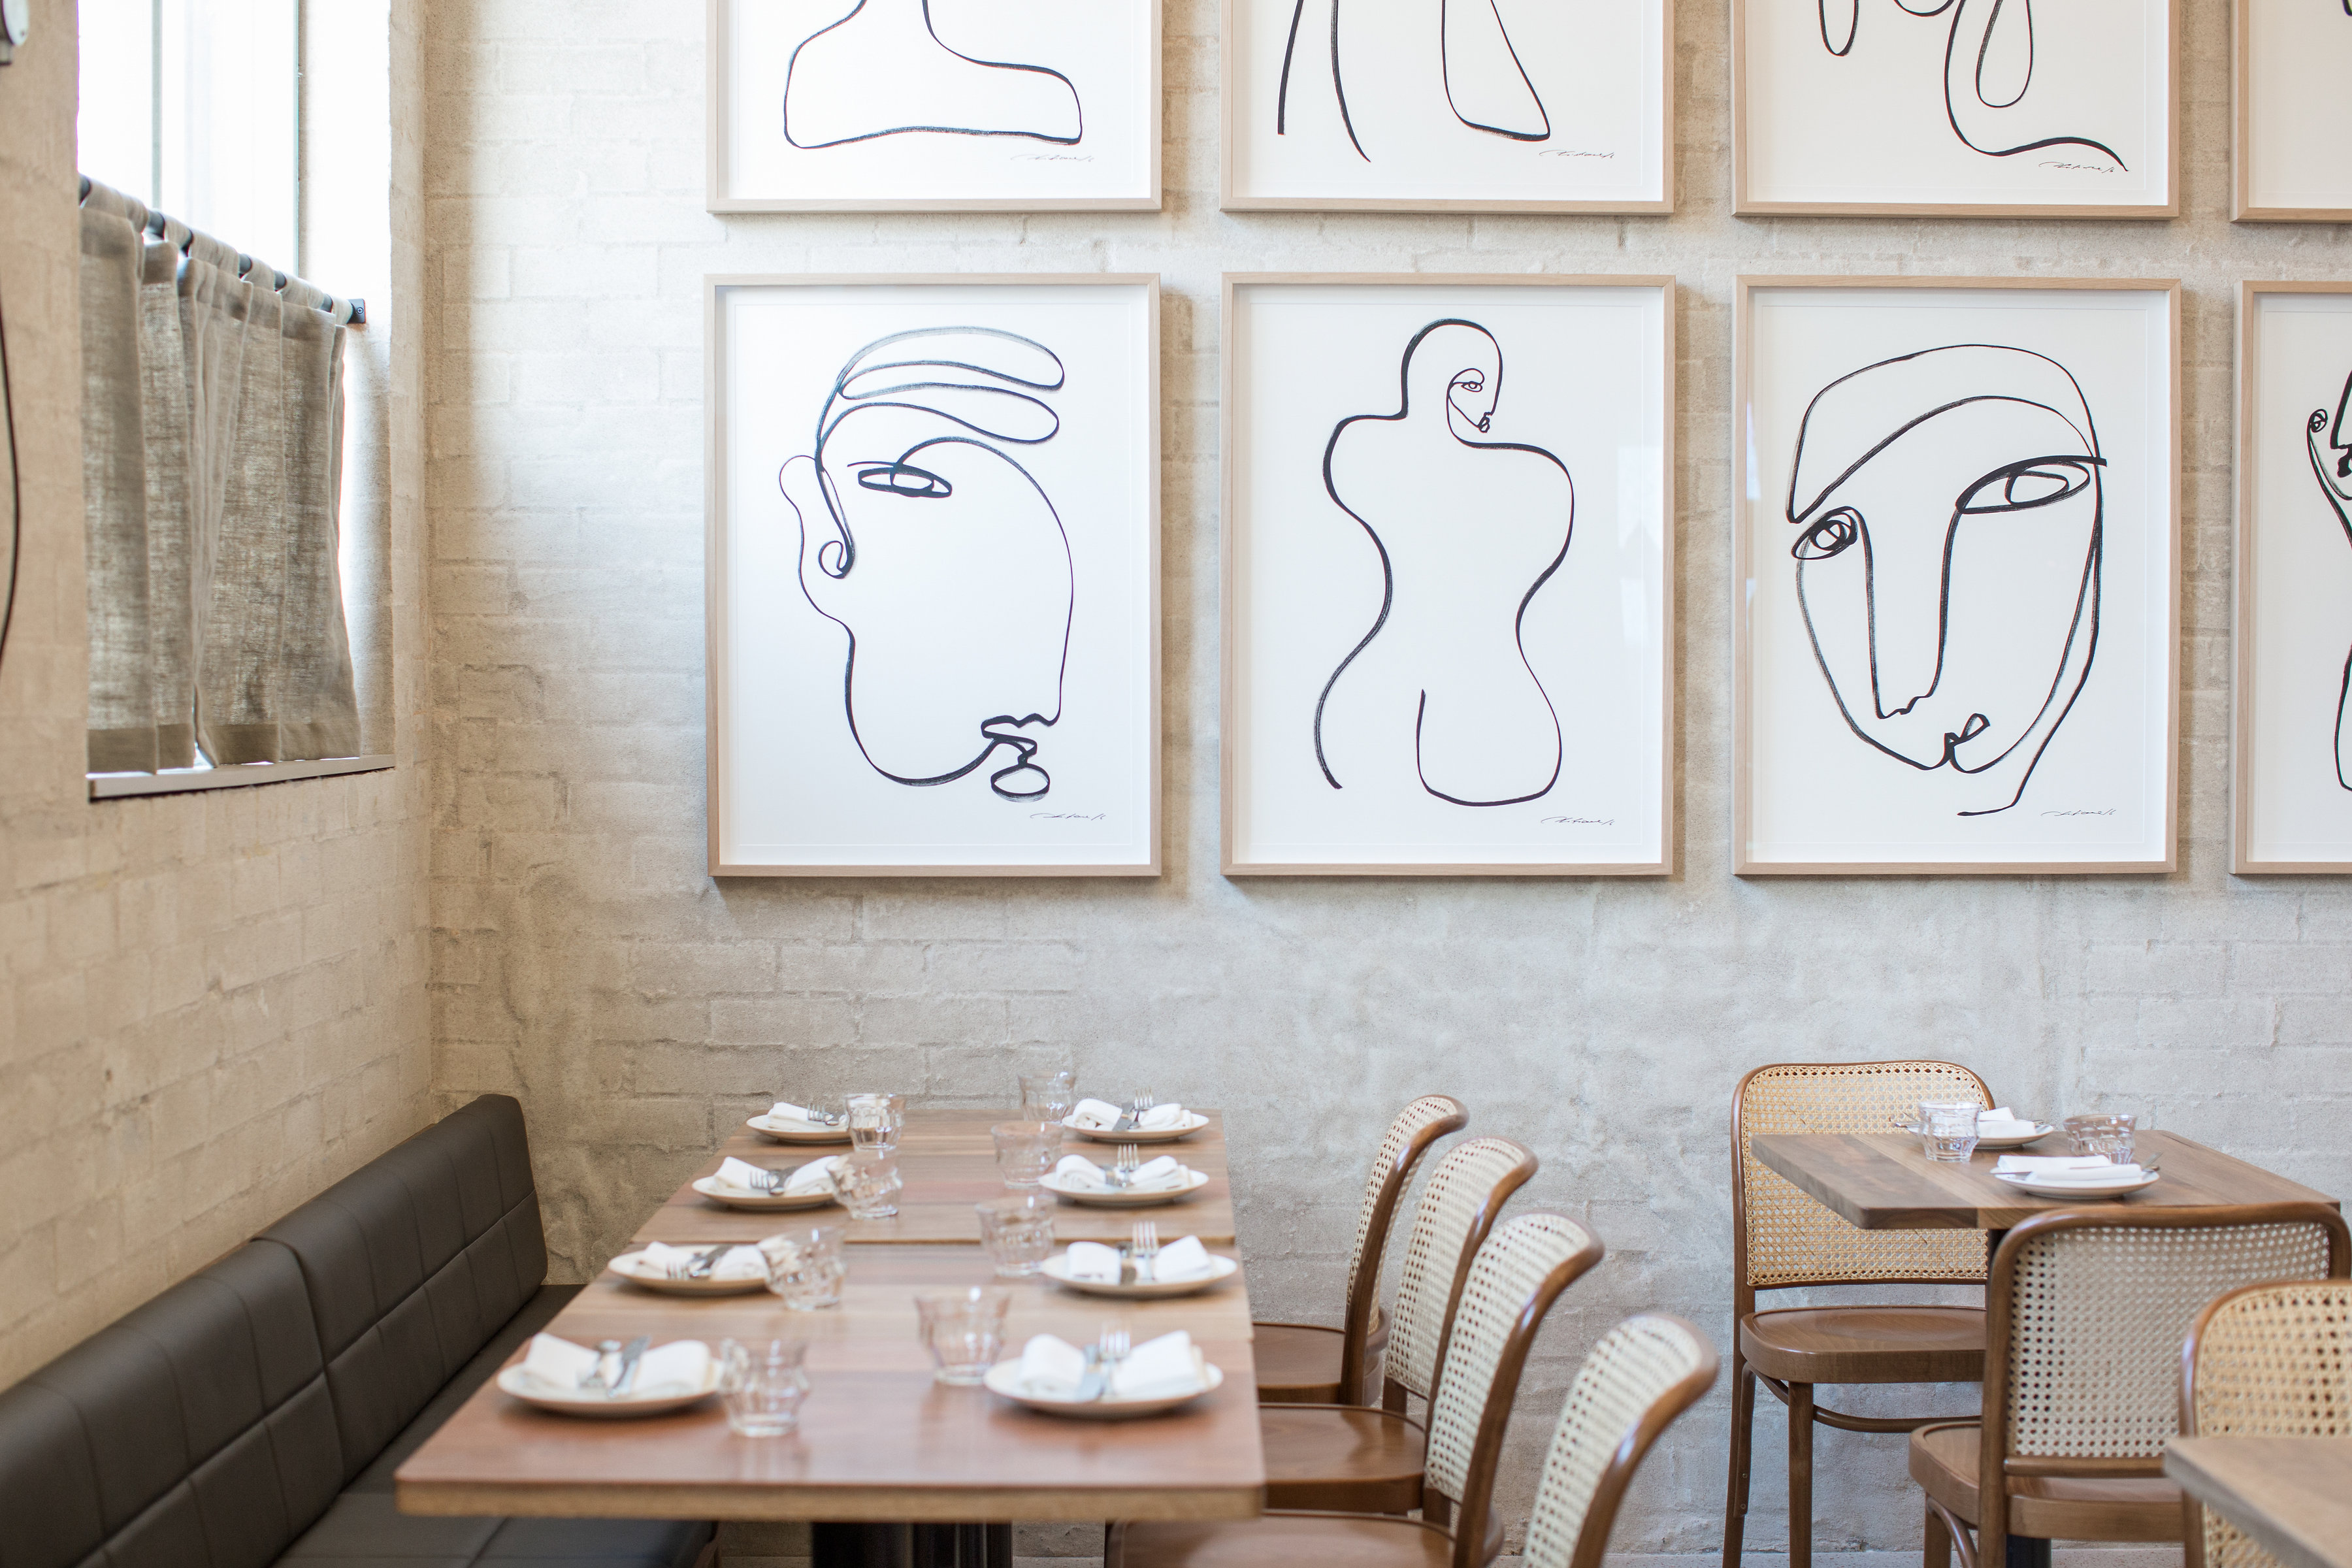 Sydney restaurant Paddington Inn with the work of Christiane spangsberg